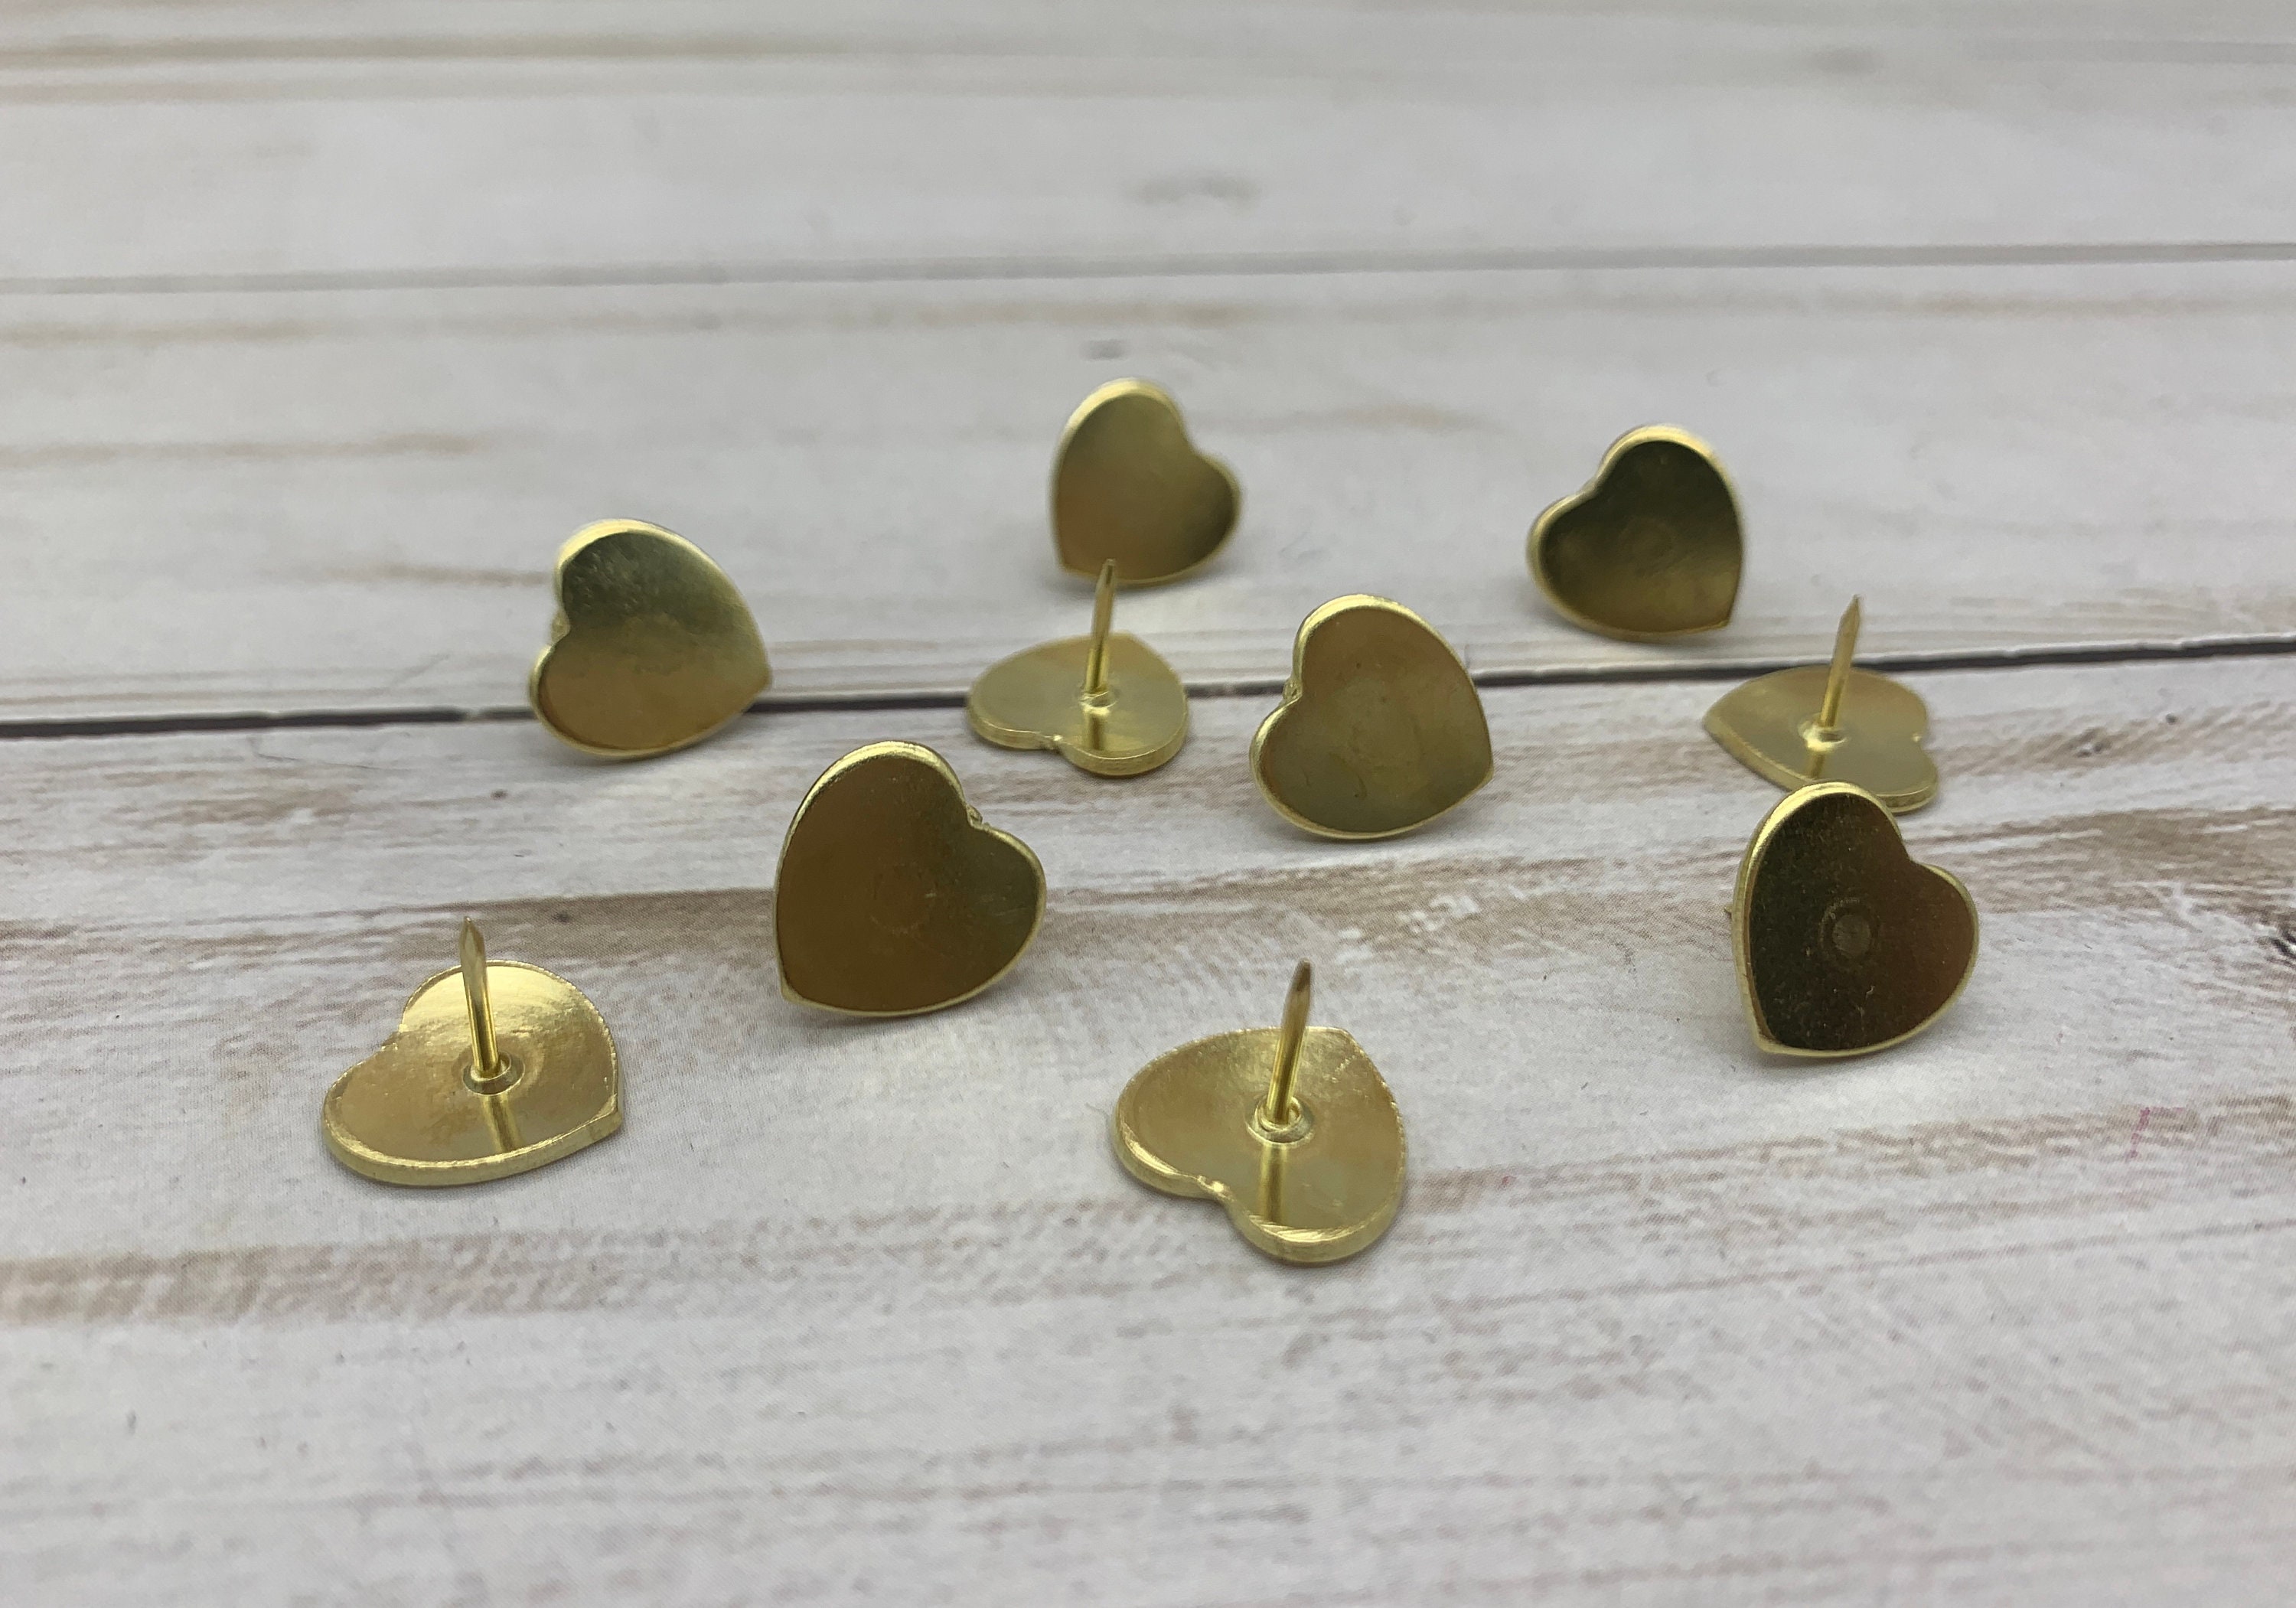 Push Pins, Gold & Silver Hearts, Heart Pushpins, Golden Antique